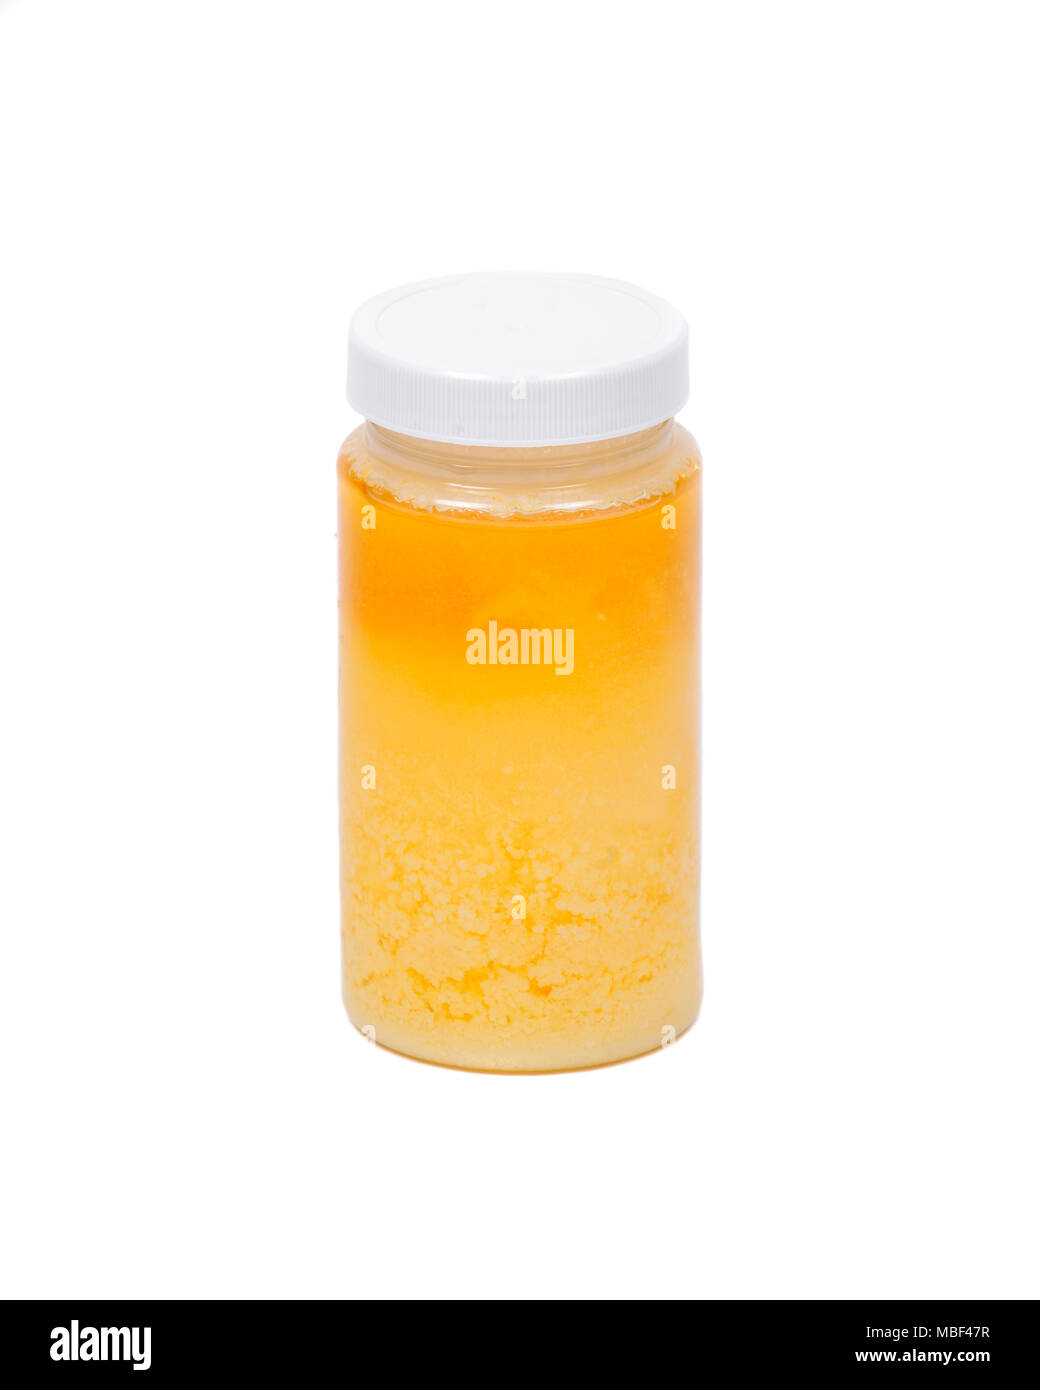 Clarified butter ghee in plastic jar Stock Photo